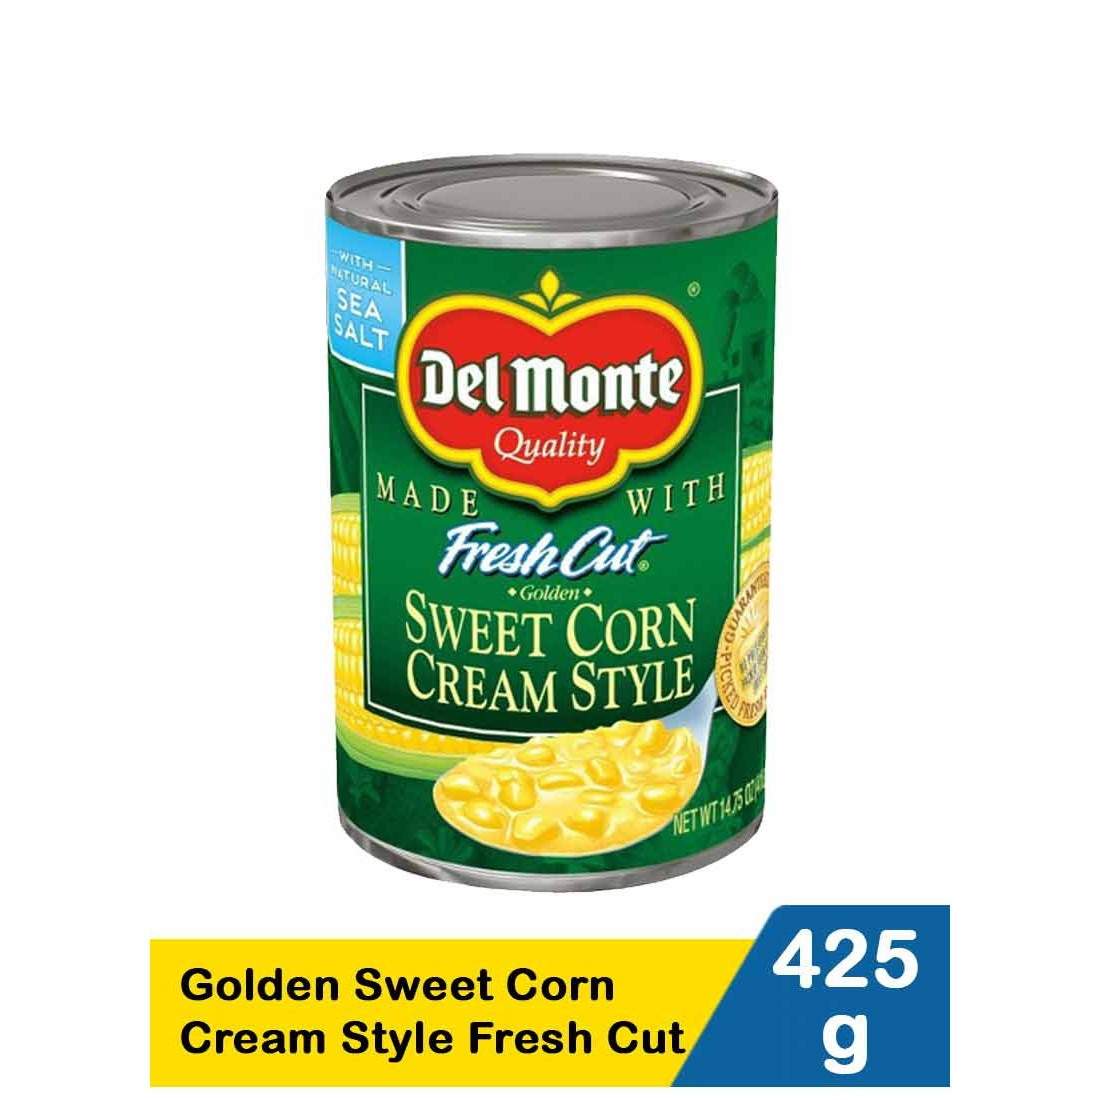 Delmonte 425g Golden Sweet Corn Cream Style Fresh Cut